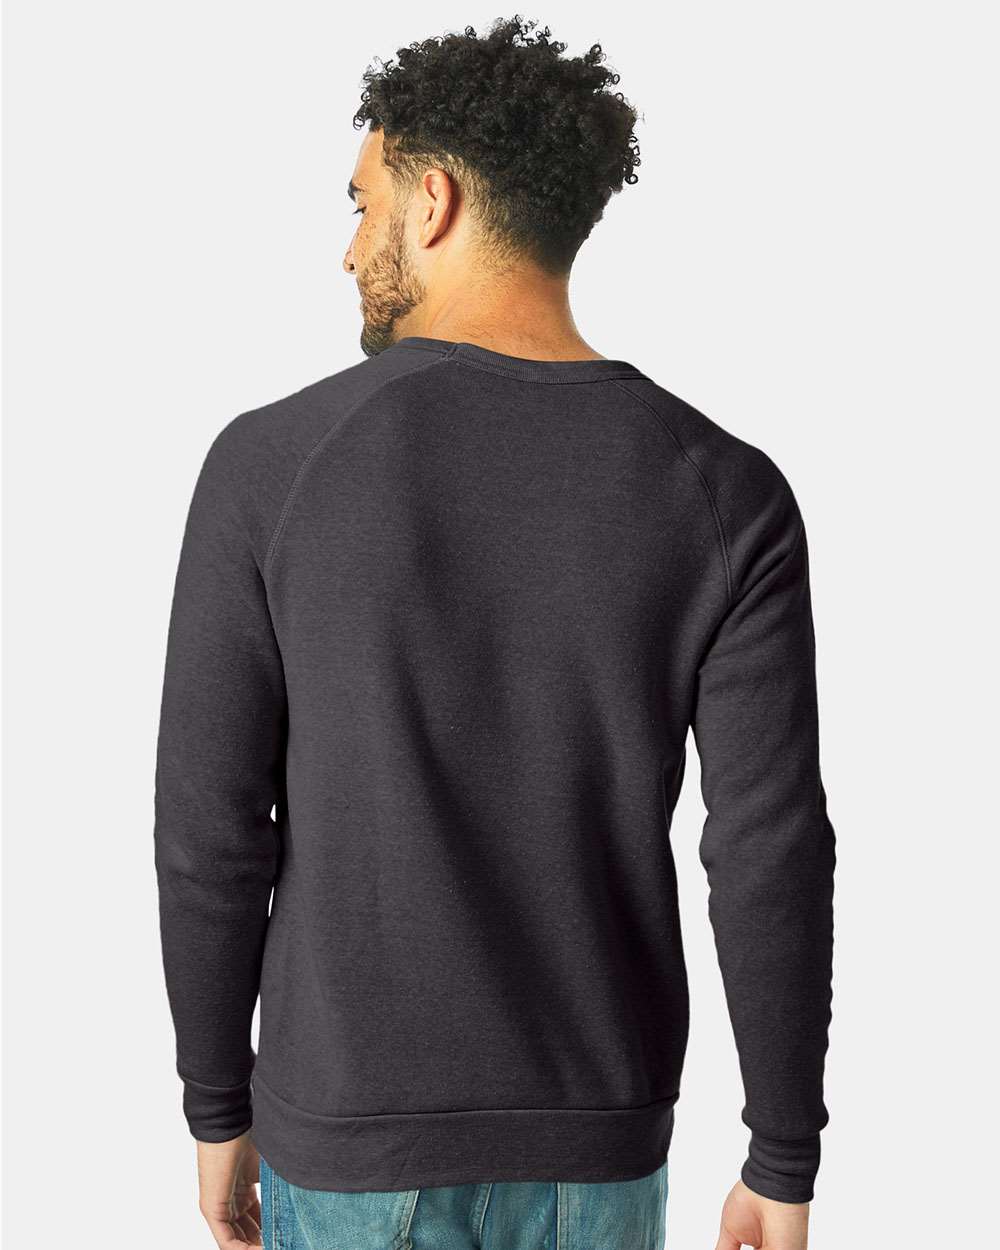 Alternative Champ Eco-Fleece Crewneck Sweatshirt 9575 #colormdl_Eco True Black